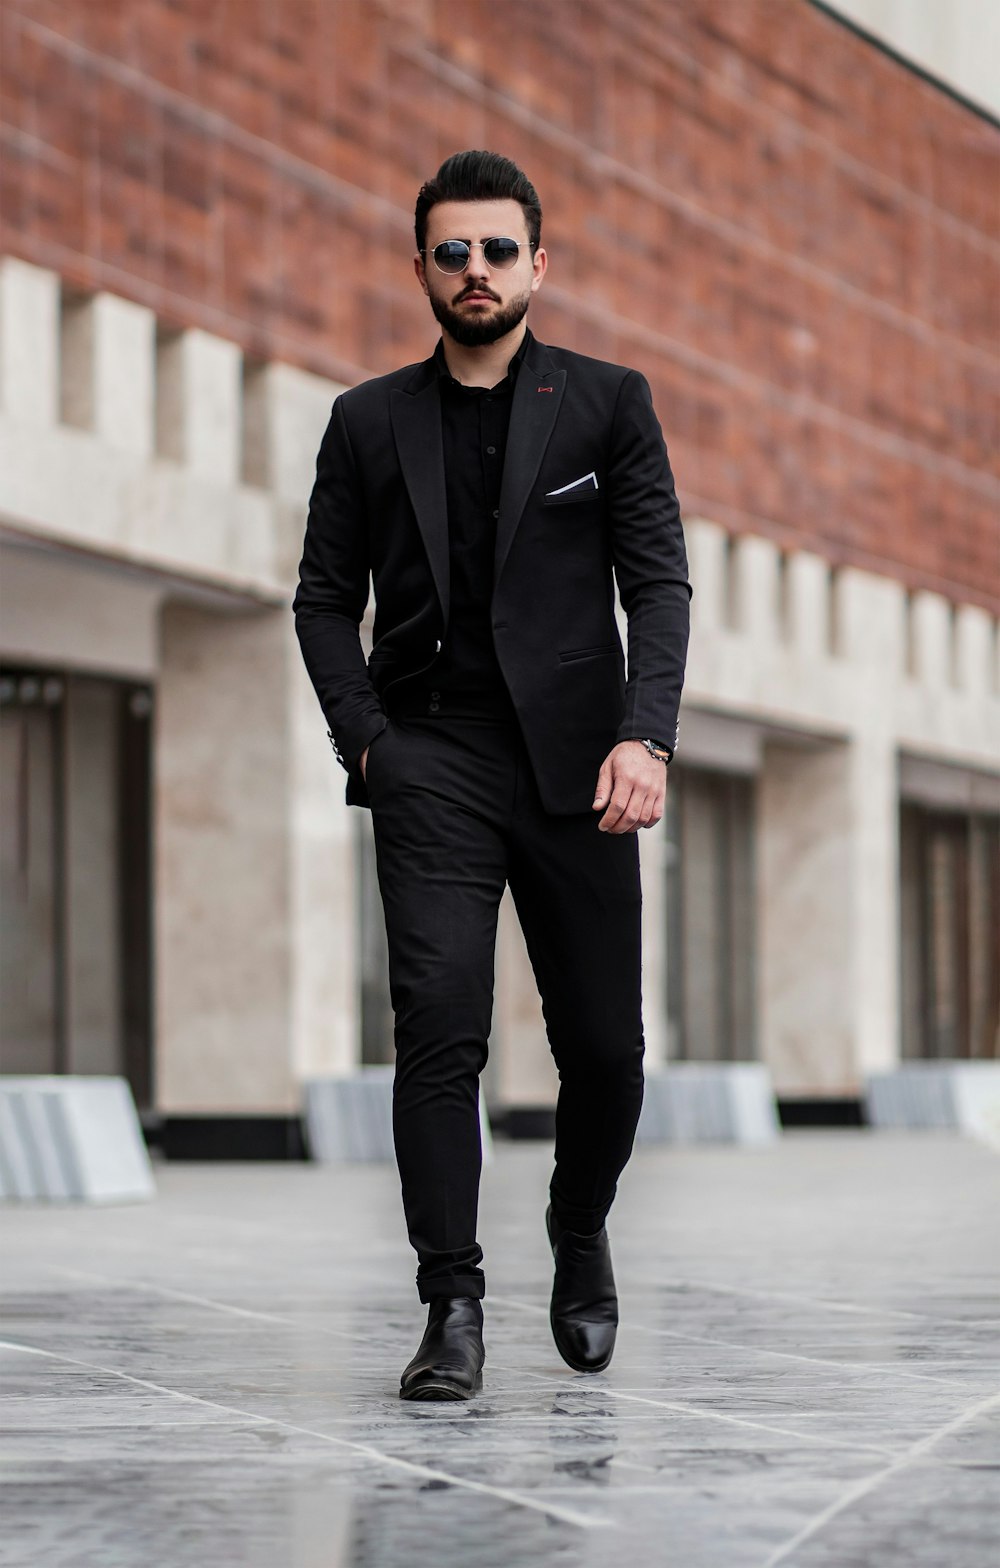 Cumplir Correa grava man in black suit jacket and black pants standing on gray concrete floor  during daytime photo – Free Iran Image on Unsplash